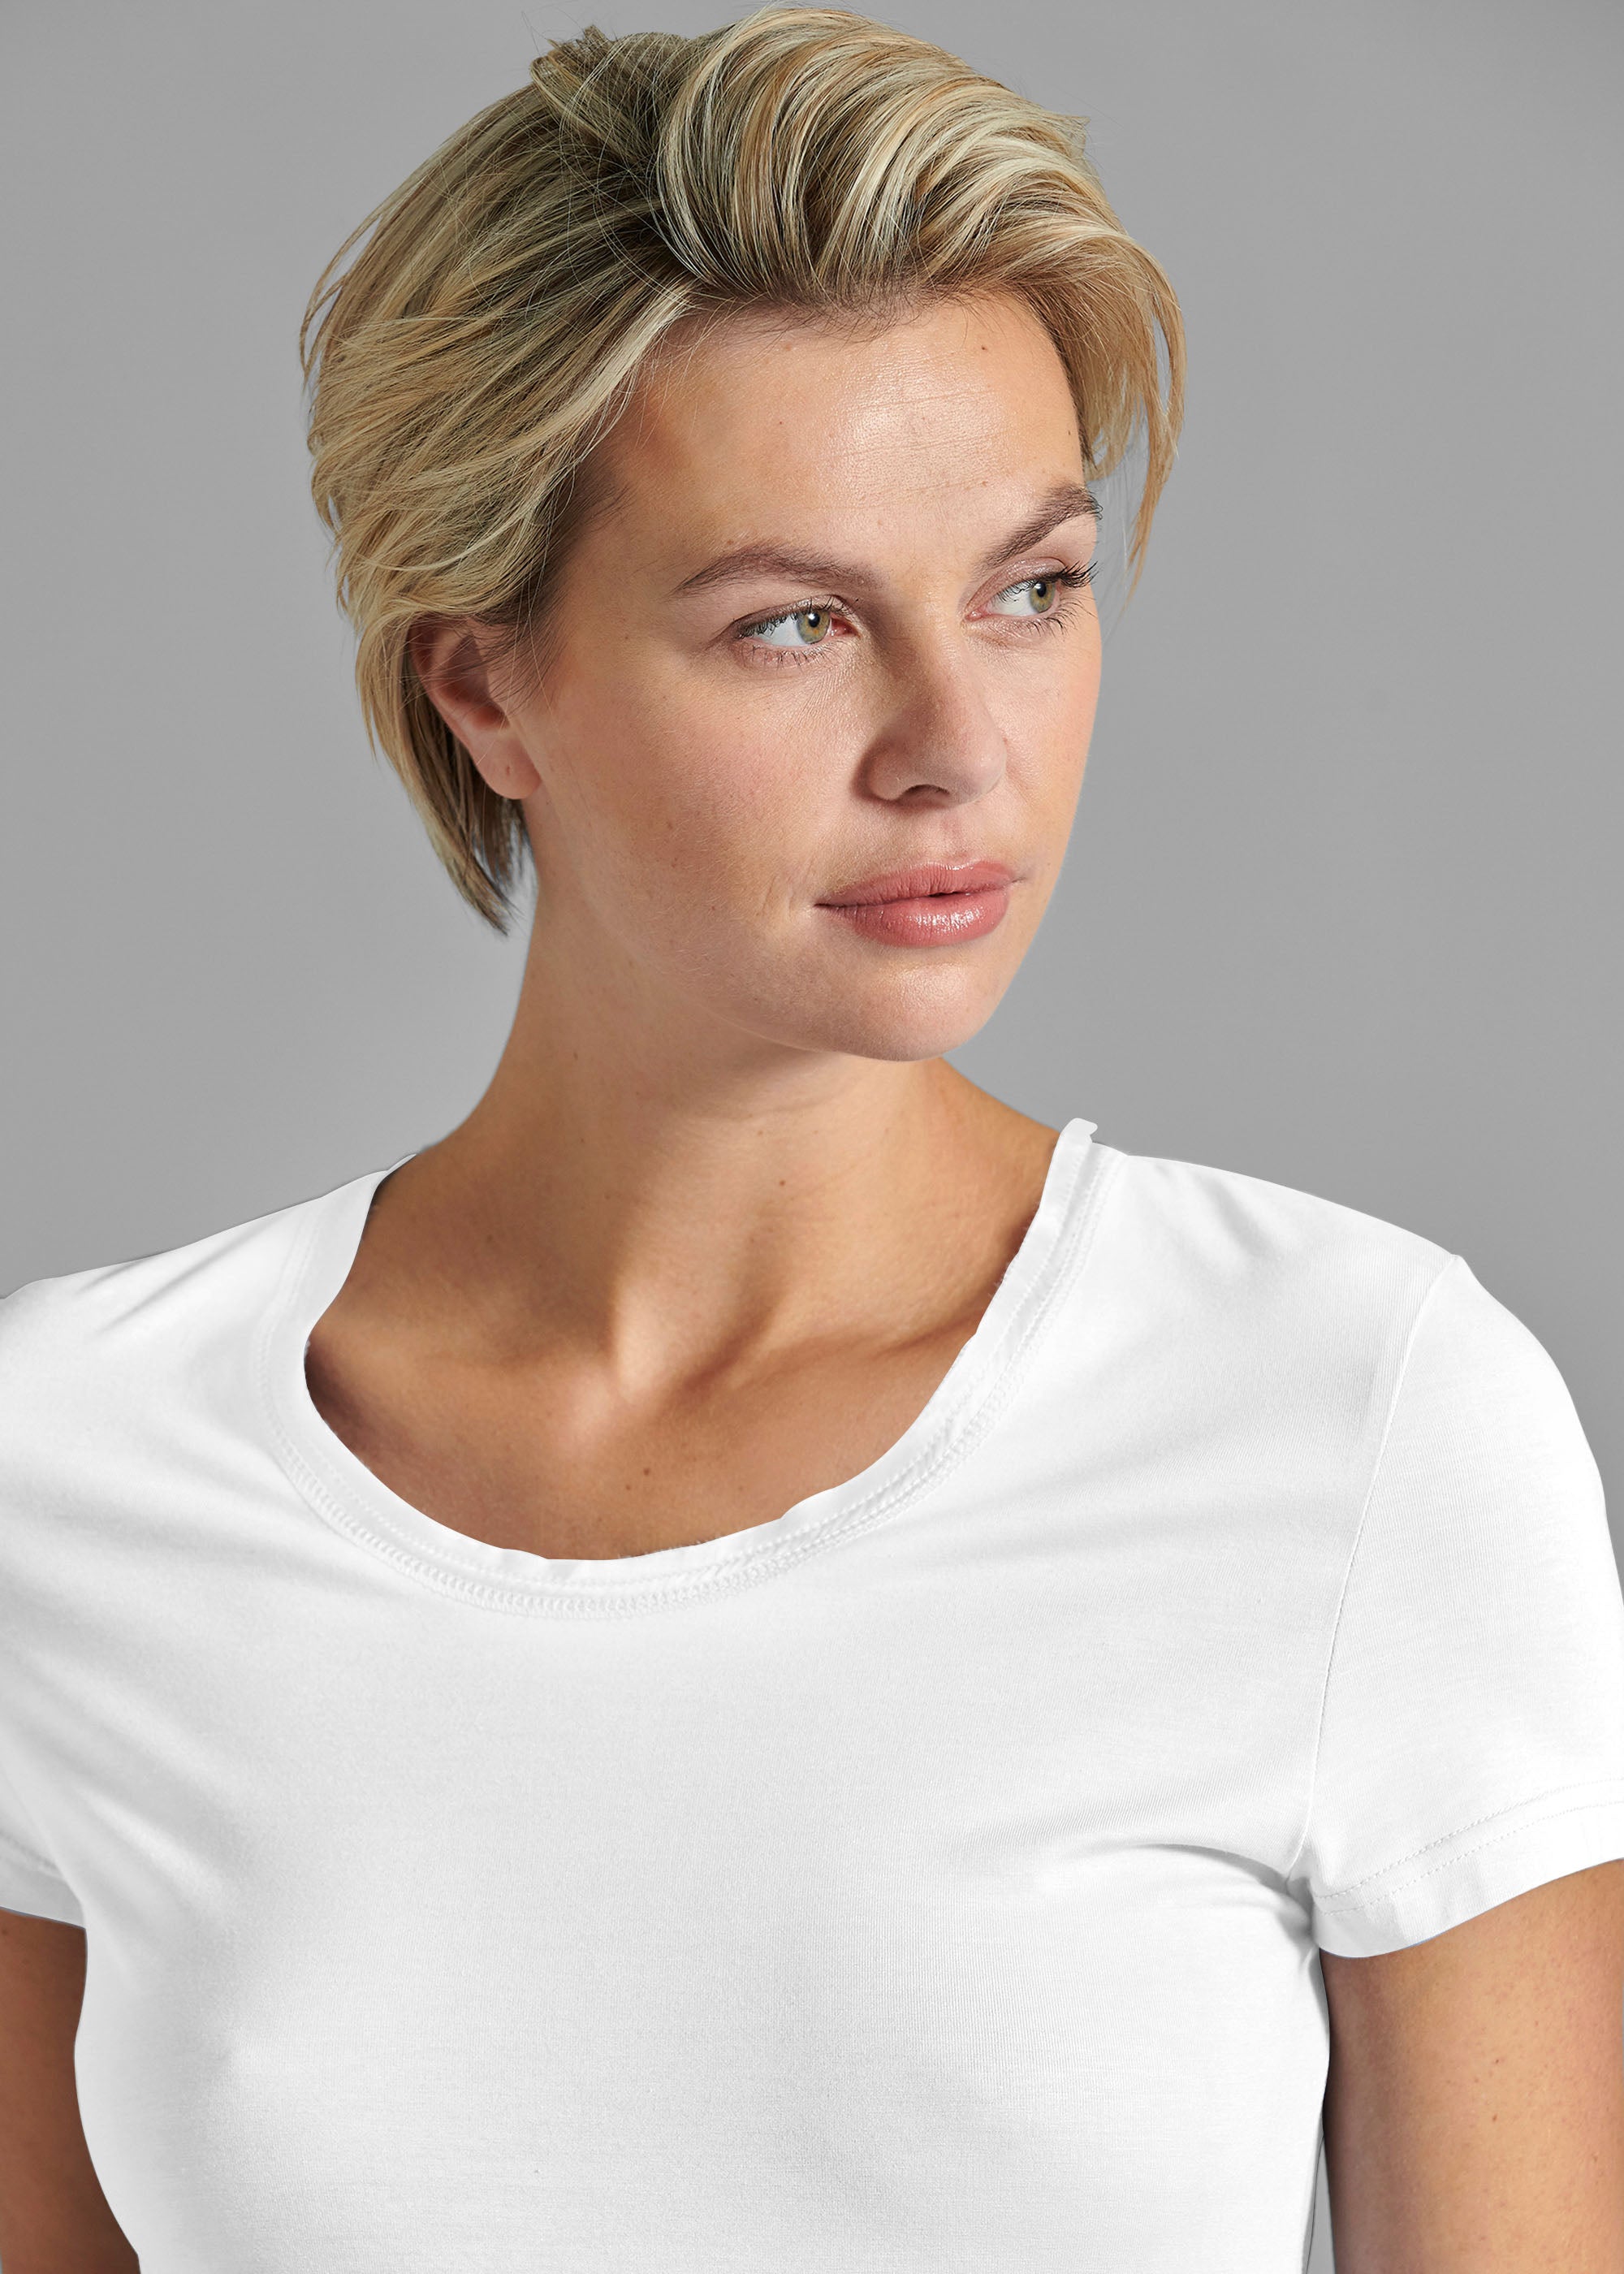 T-Shirt Modell "Doris"